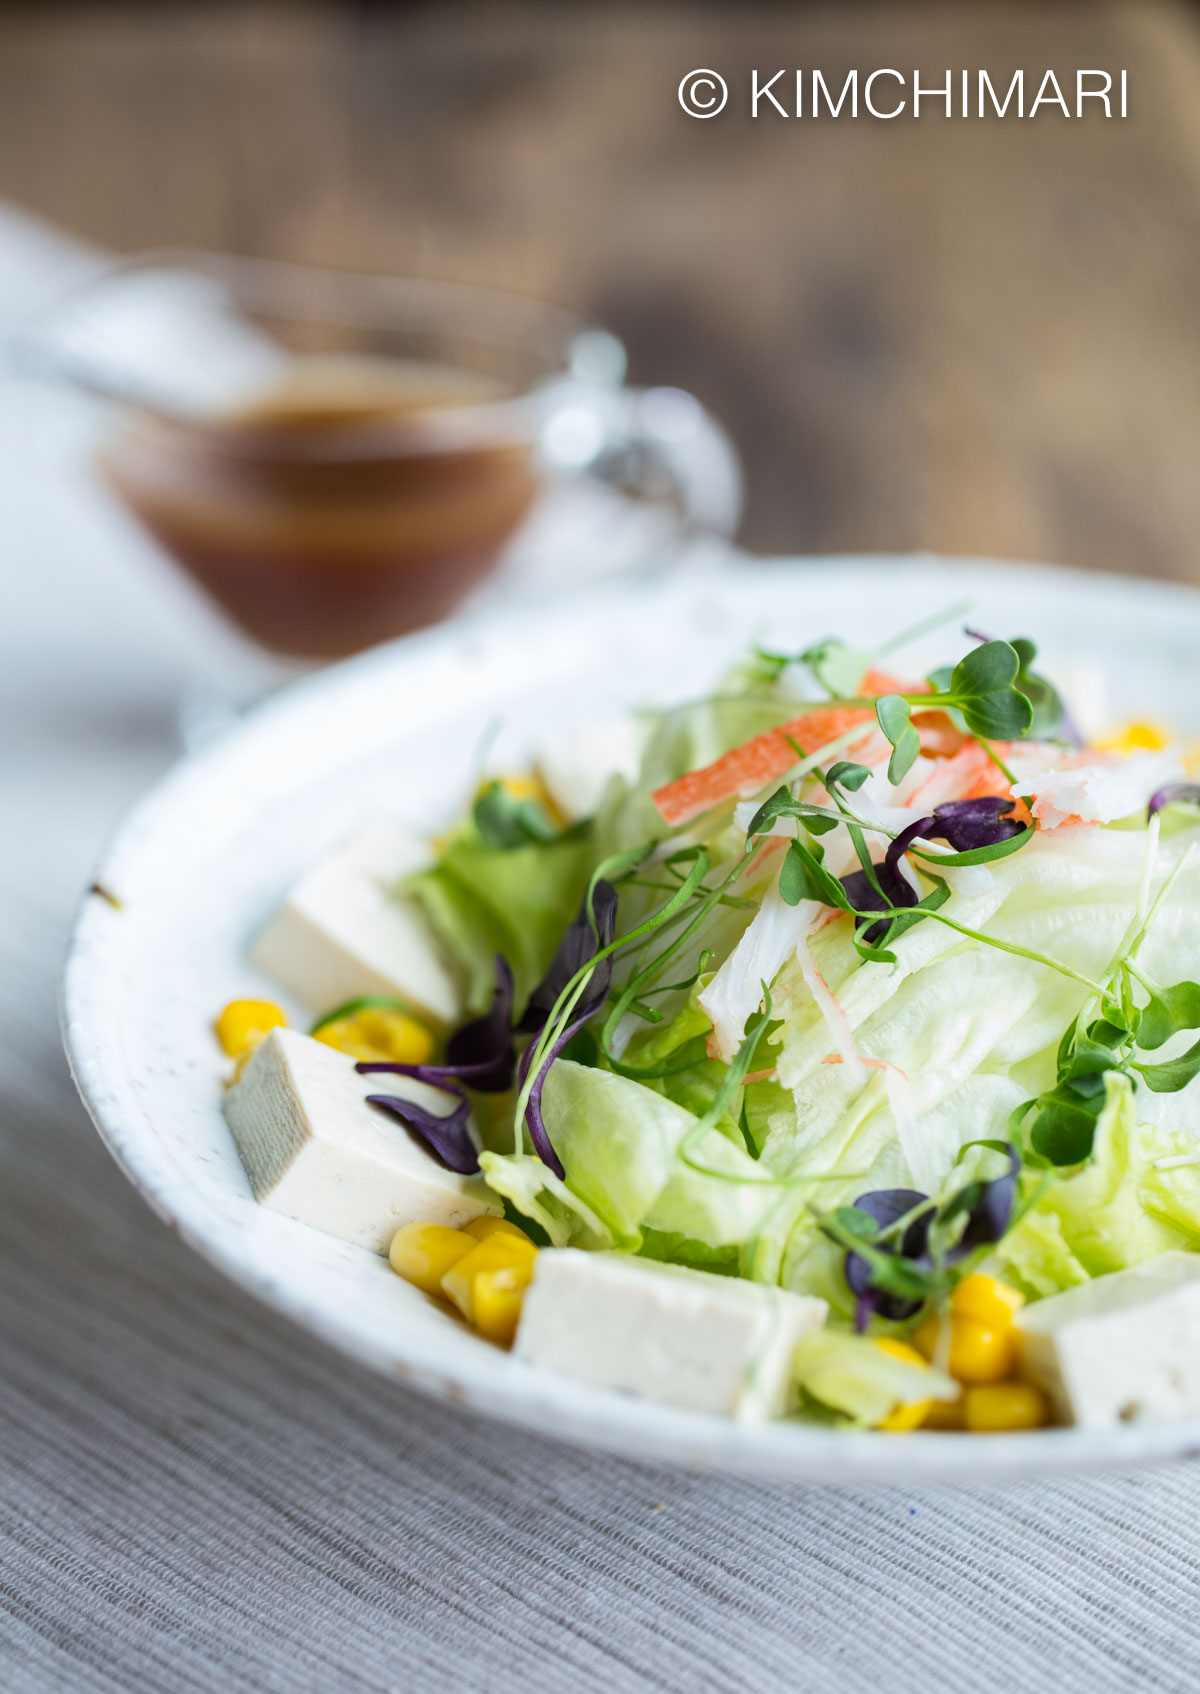 Tofu Salad with Iceberg Lettuce, Sweet Corn, Imitation Crab Meat, Microgreens